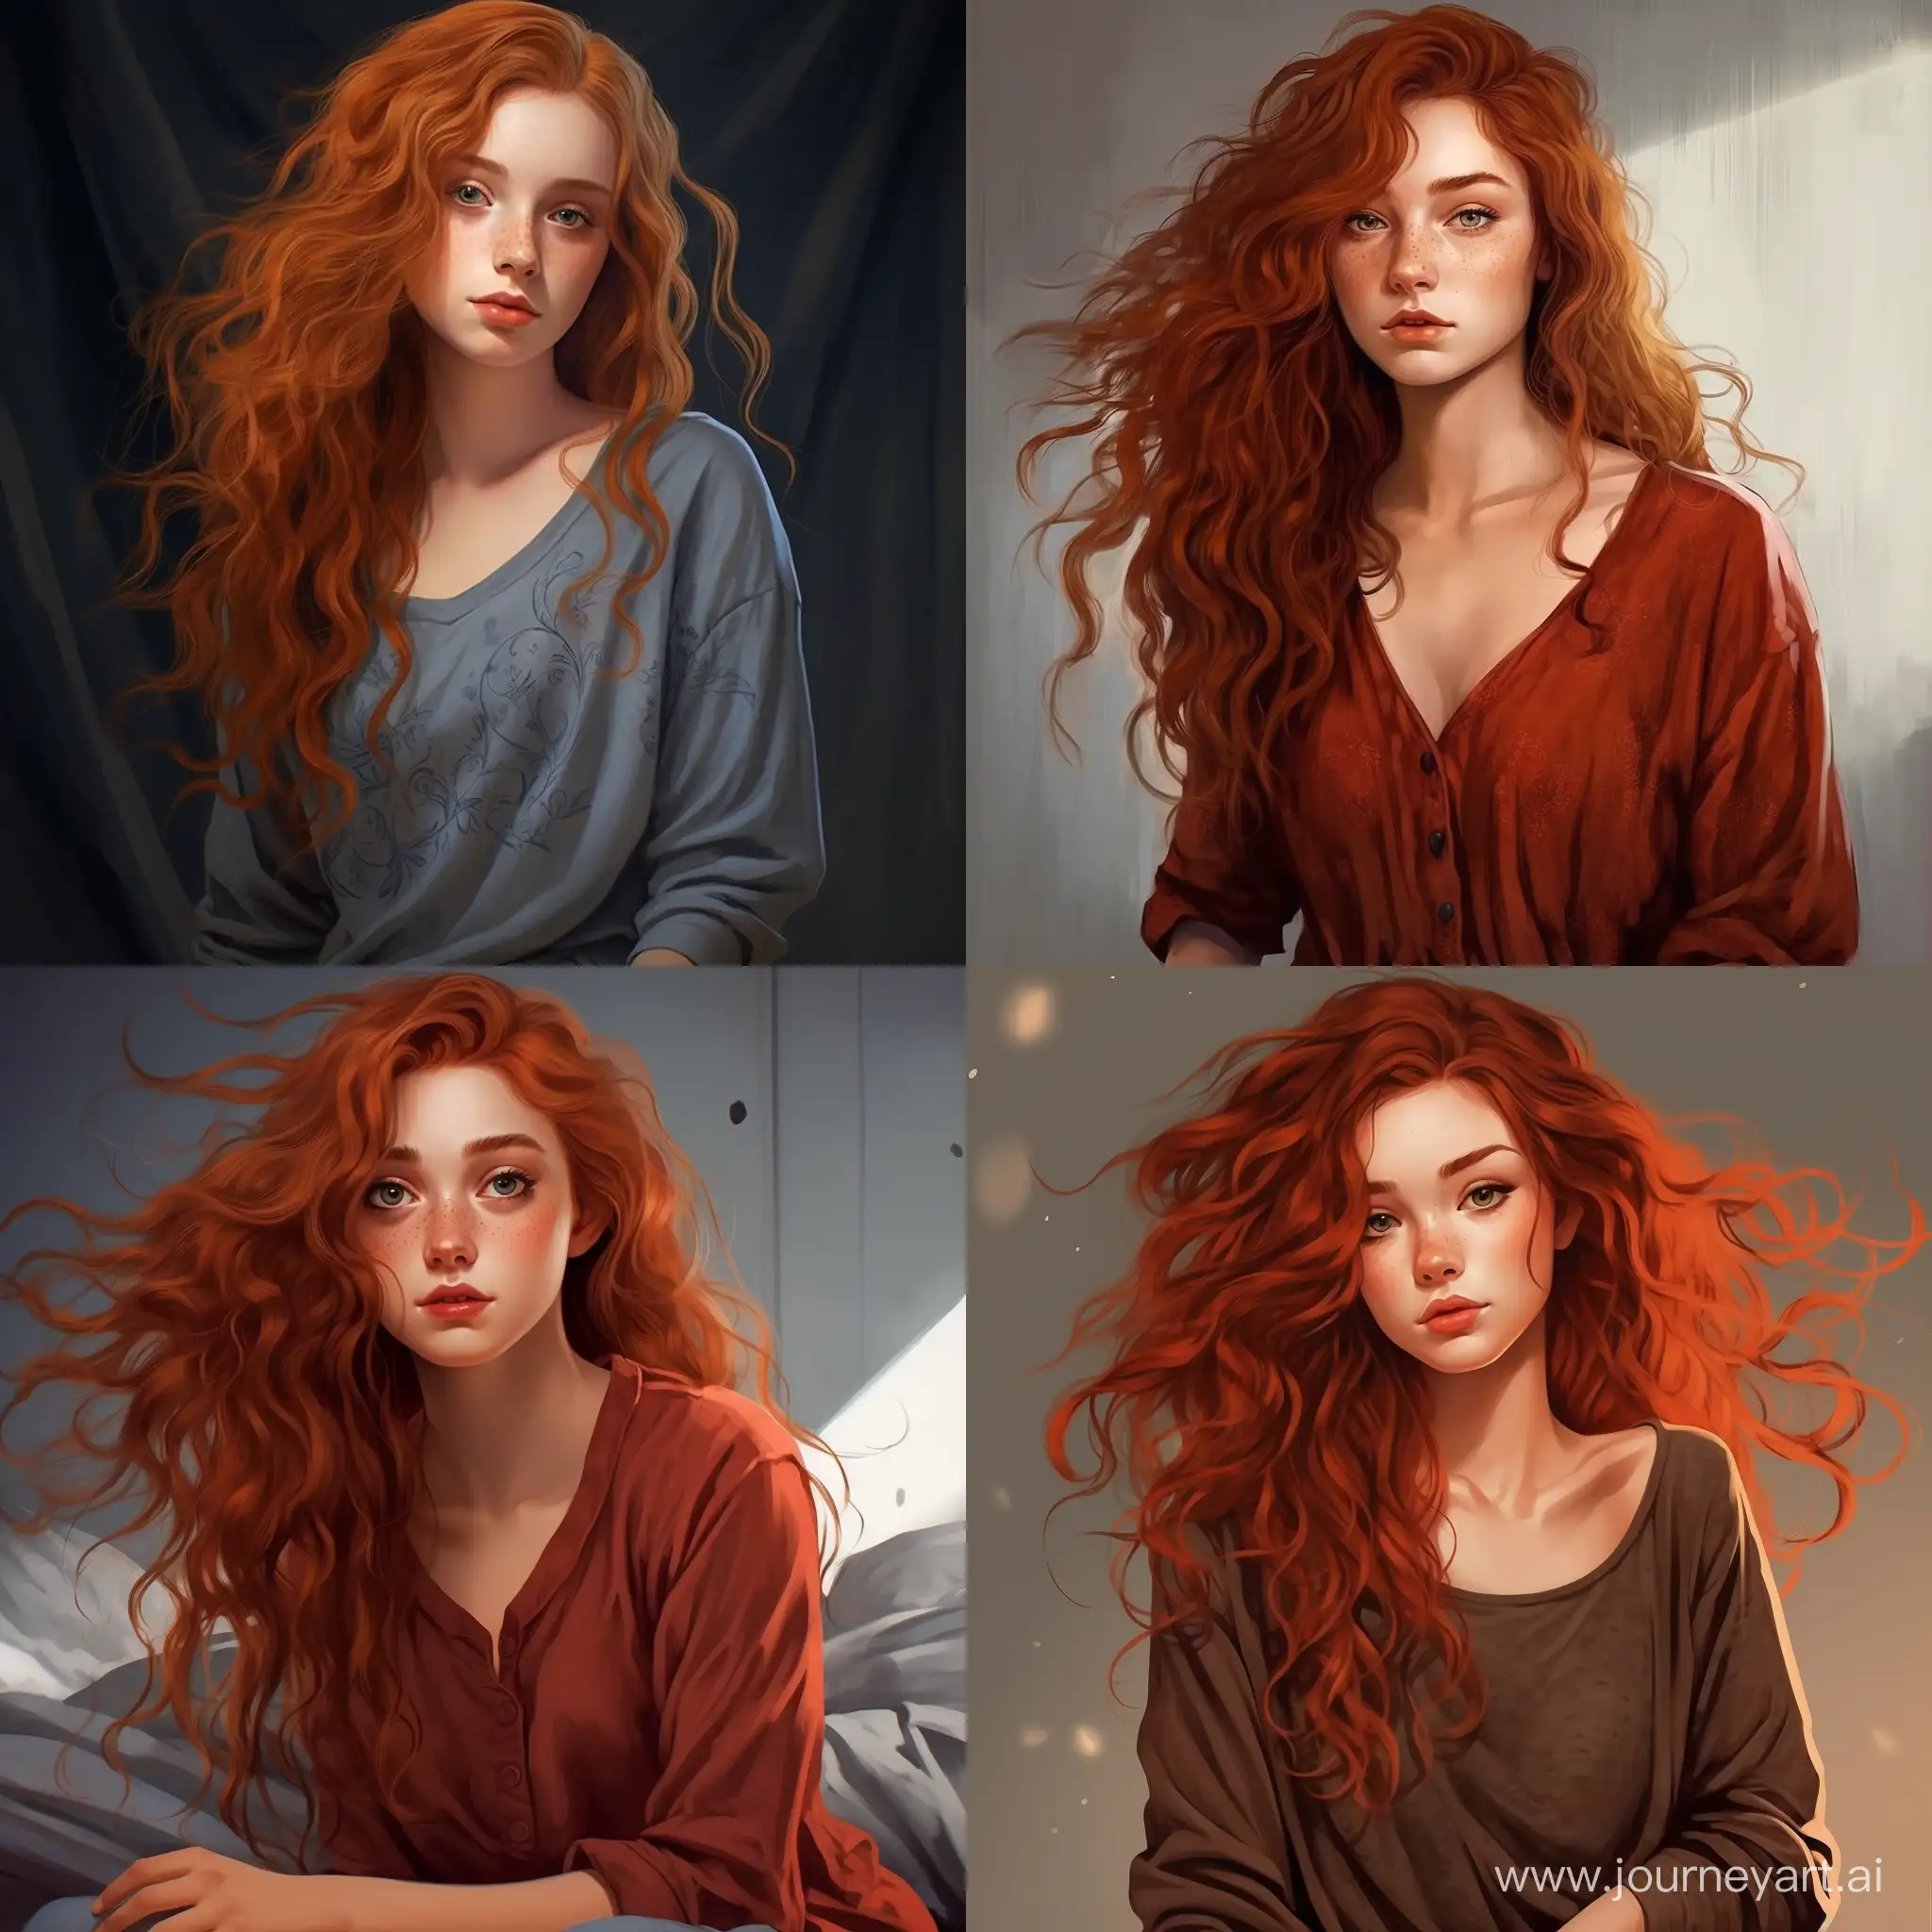 Charming-Teenage-Girl-with-Curly-Dark-Red-Hair-in-Stylish-Cartoon-Art